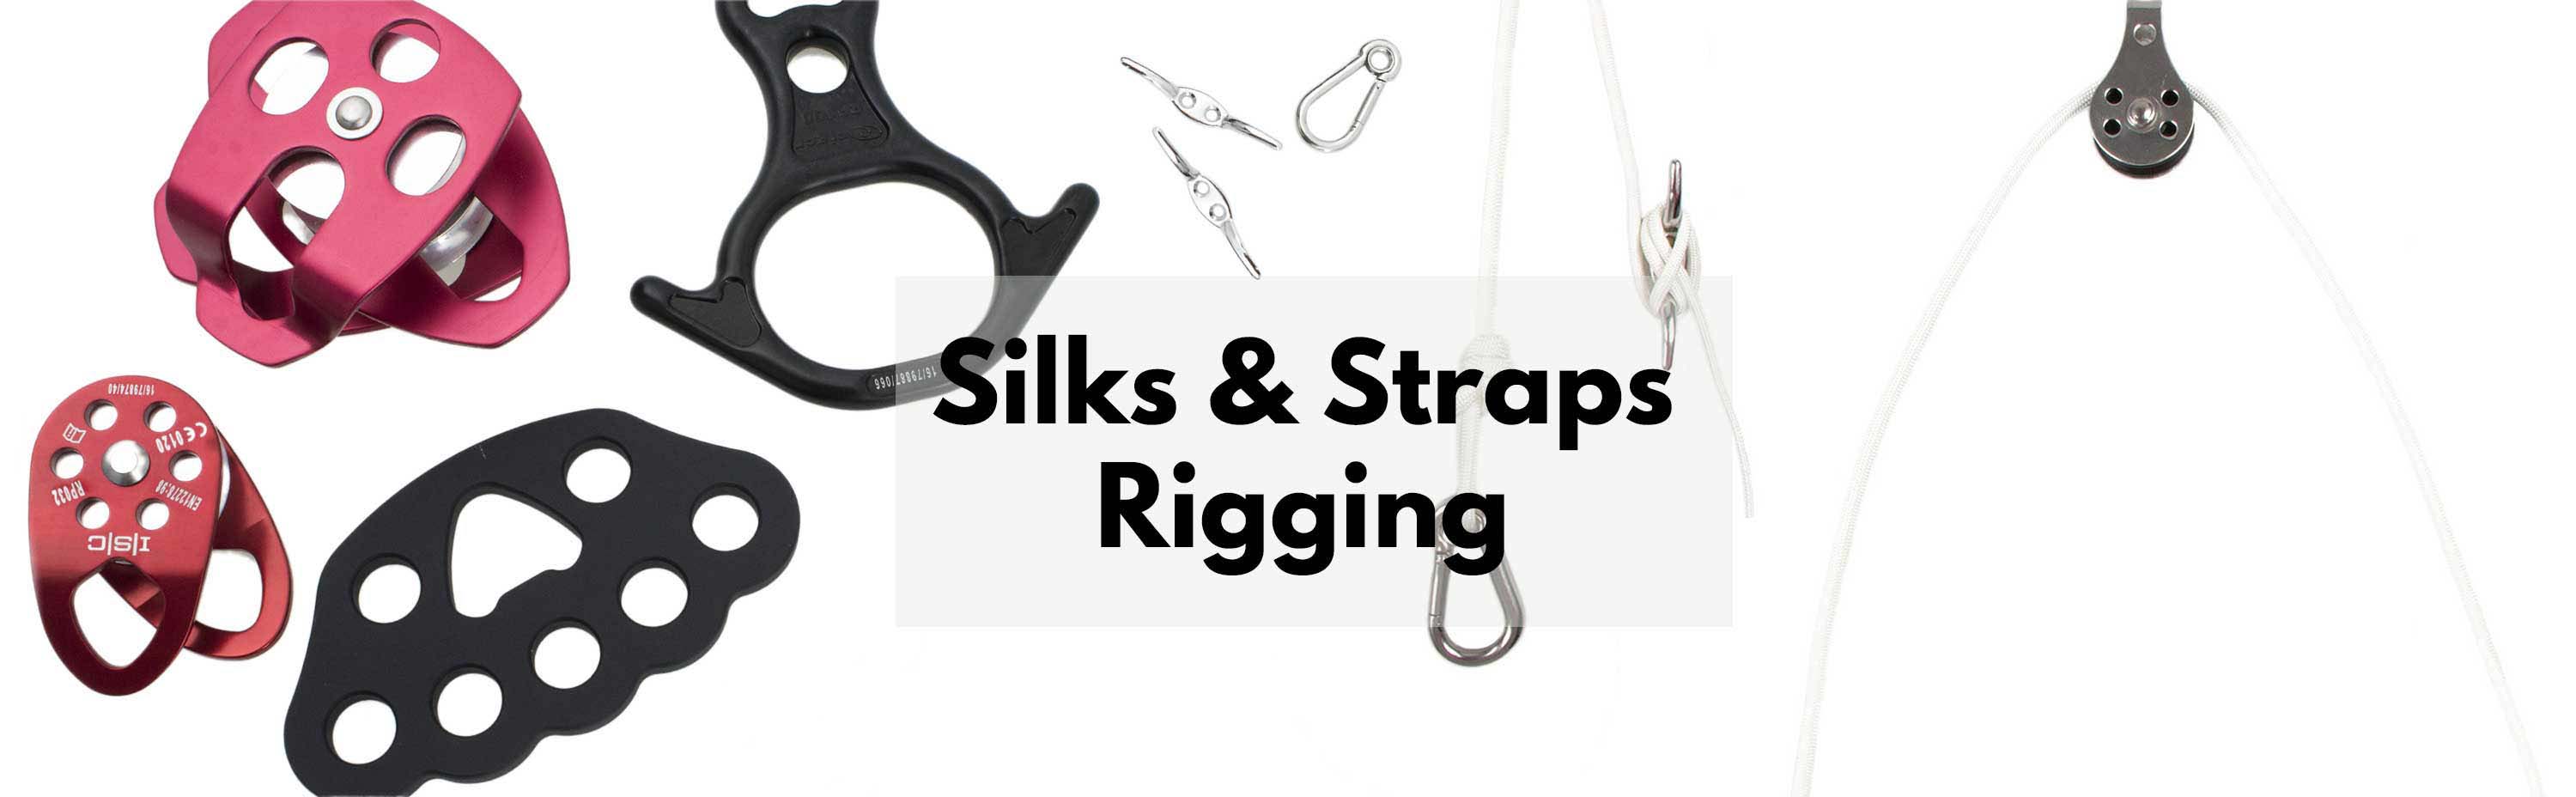 Silks and Straps Rigging